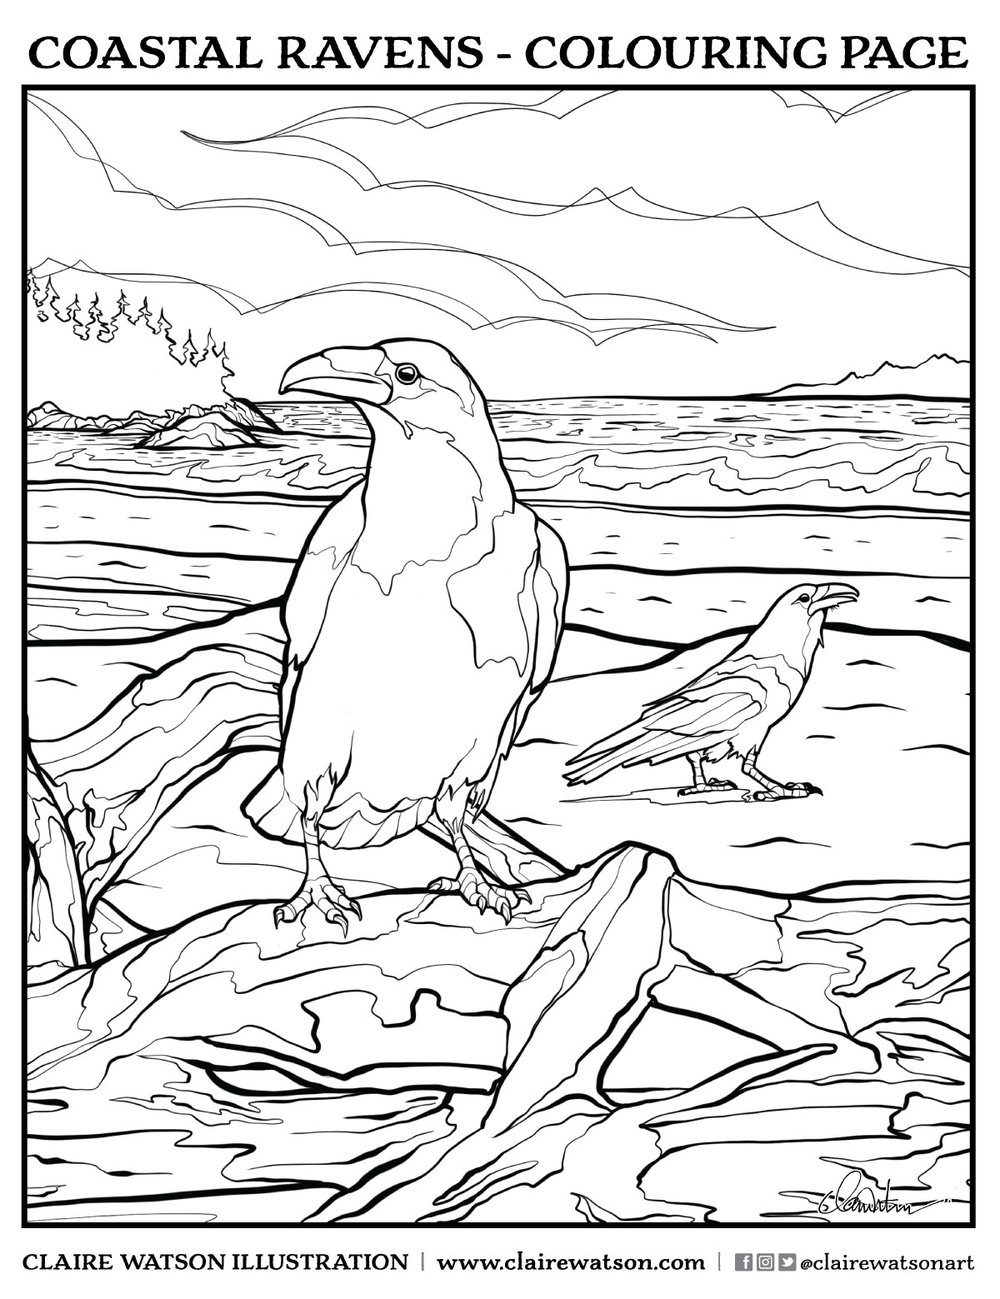 Coastal Ravens - Colouring Page — CLAIRE VICTORIA // Art, Illustration and  Design